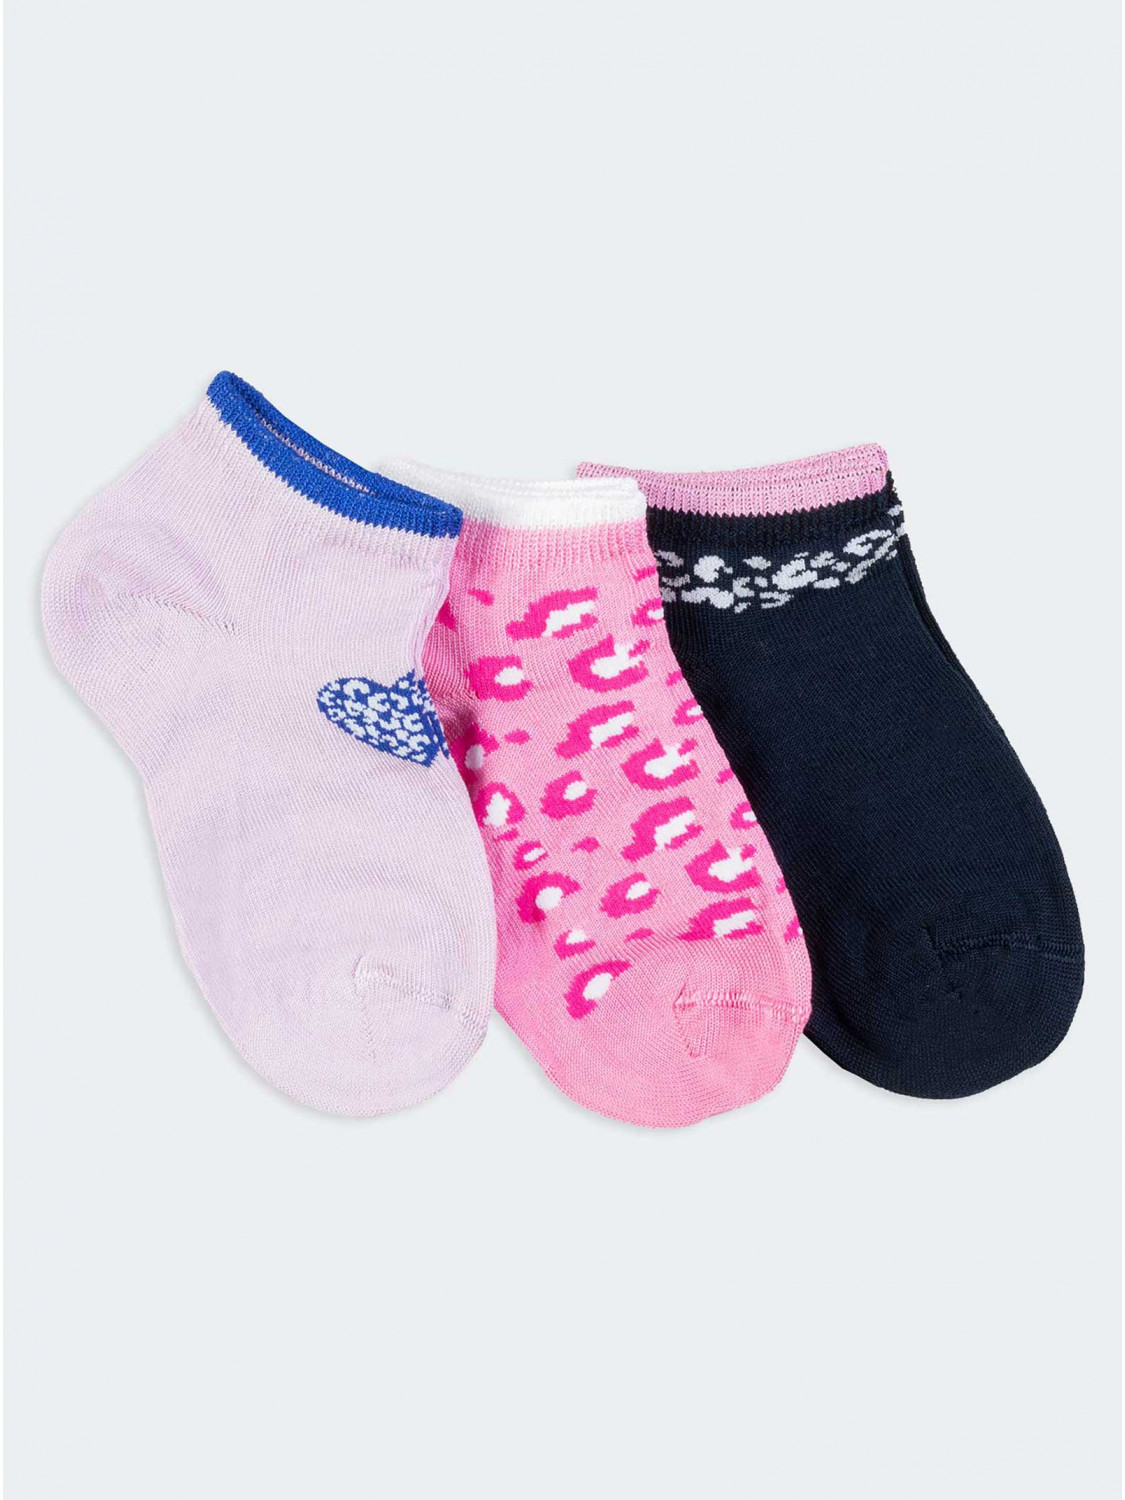 Tris short socks pattern heart and animalier